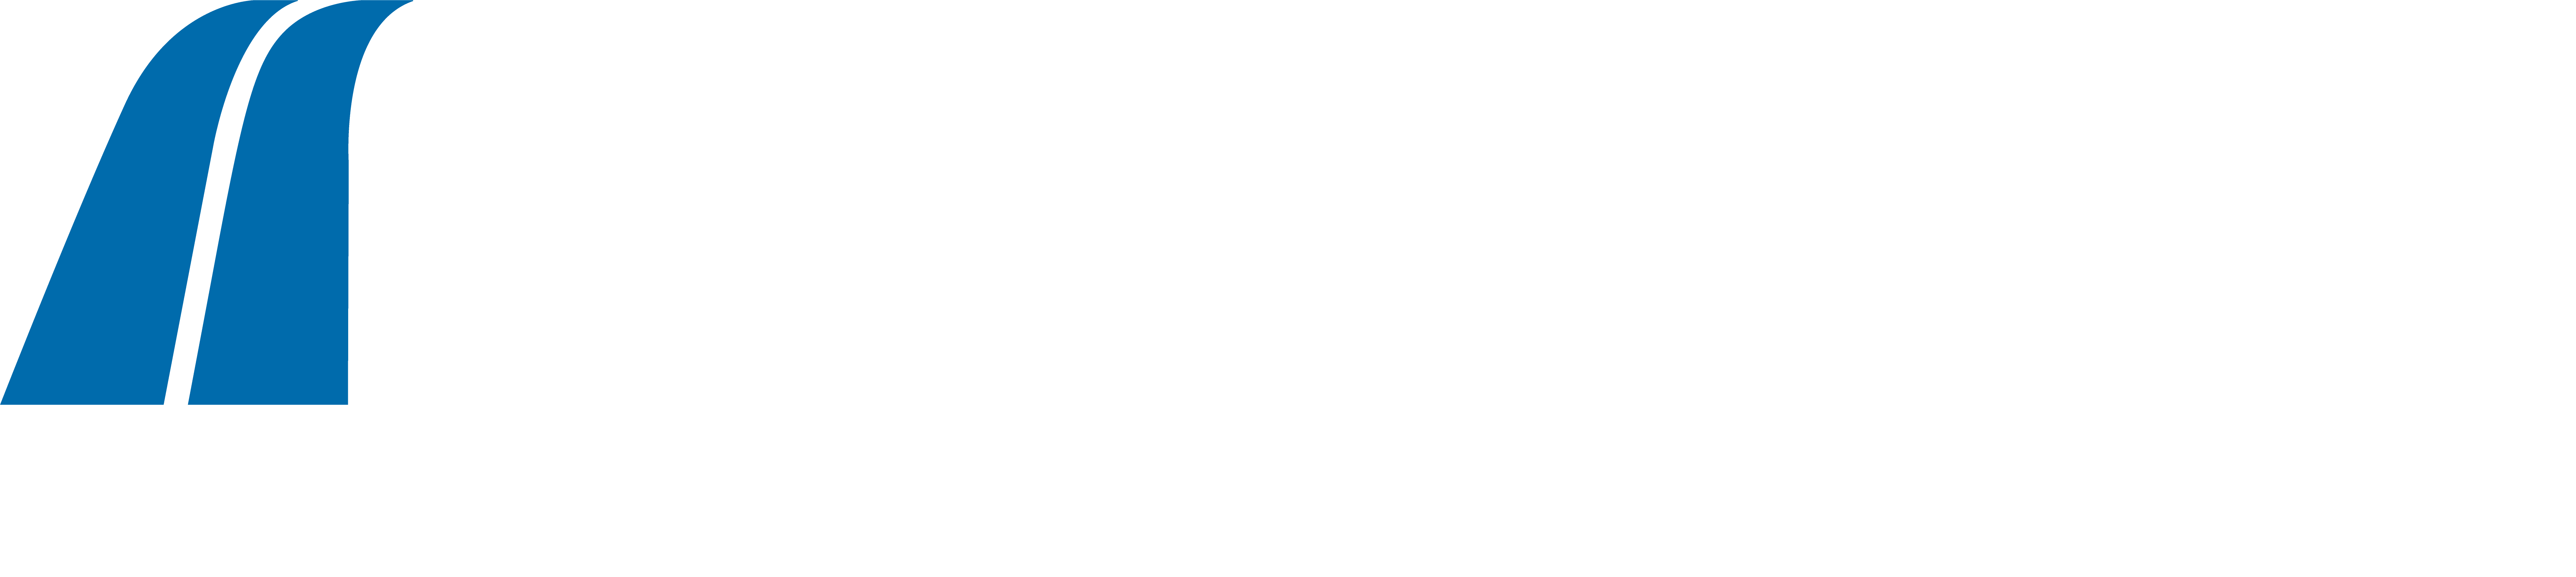 Formby Logistics Logo White Text high res